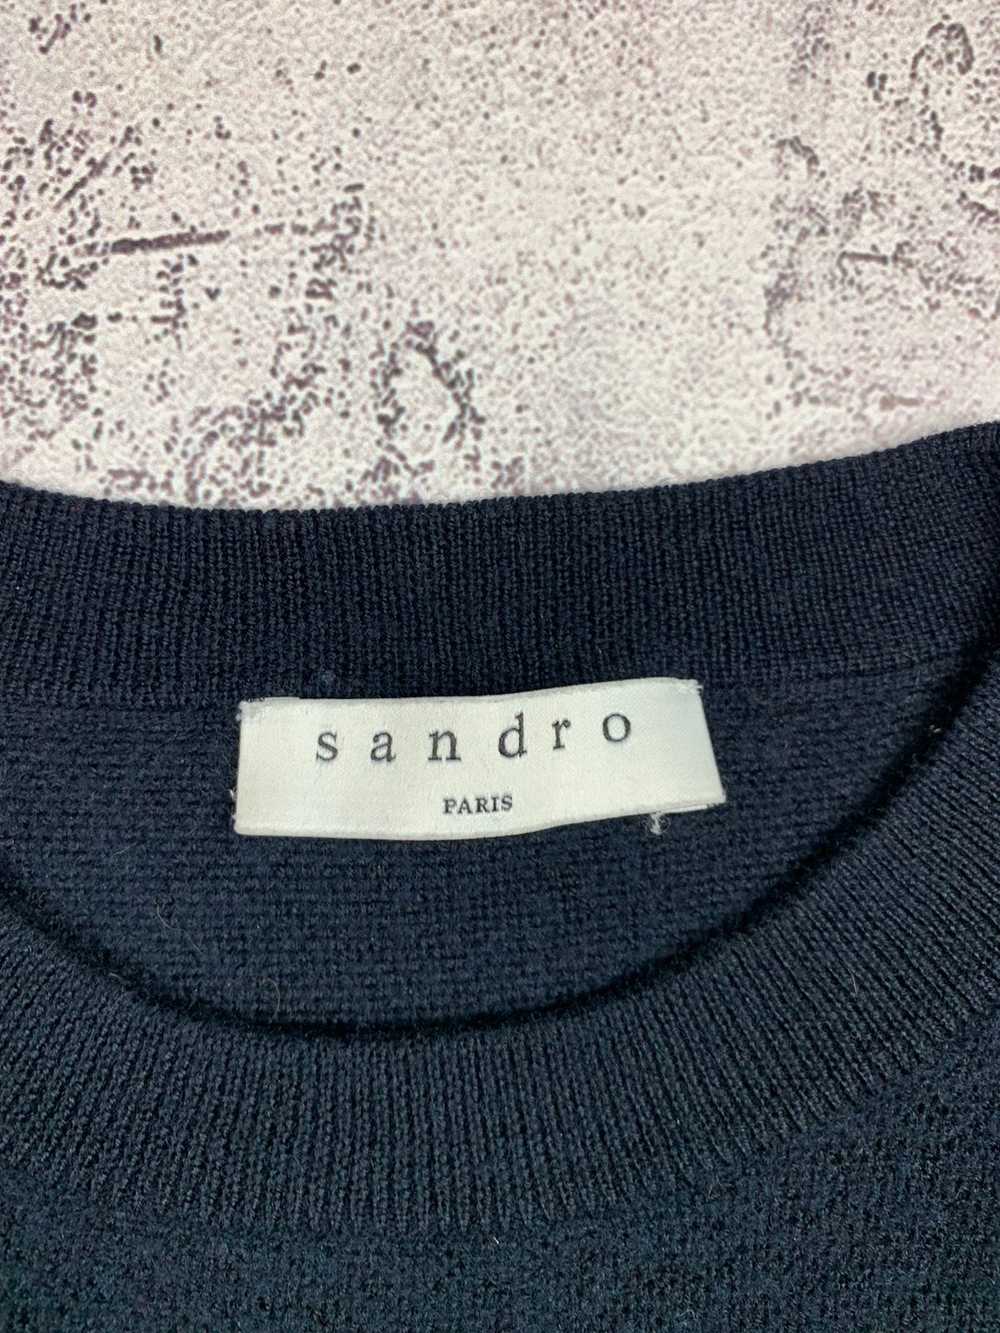 Sandro Sandro Paris Wool Sweater - image 3